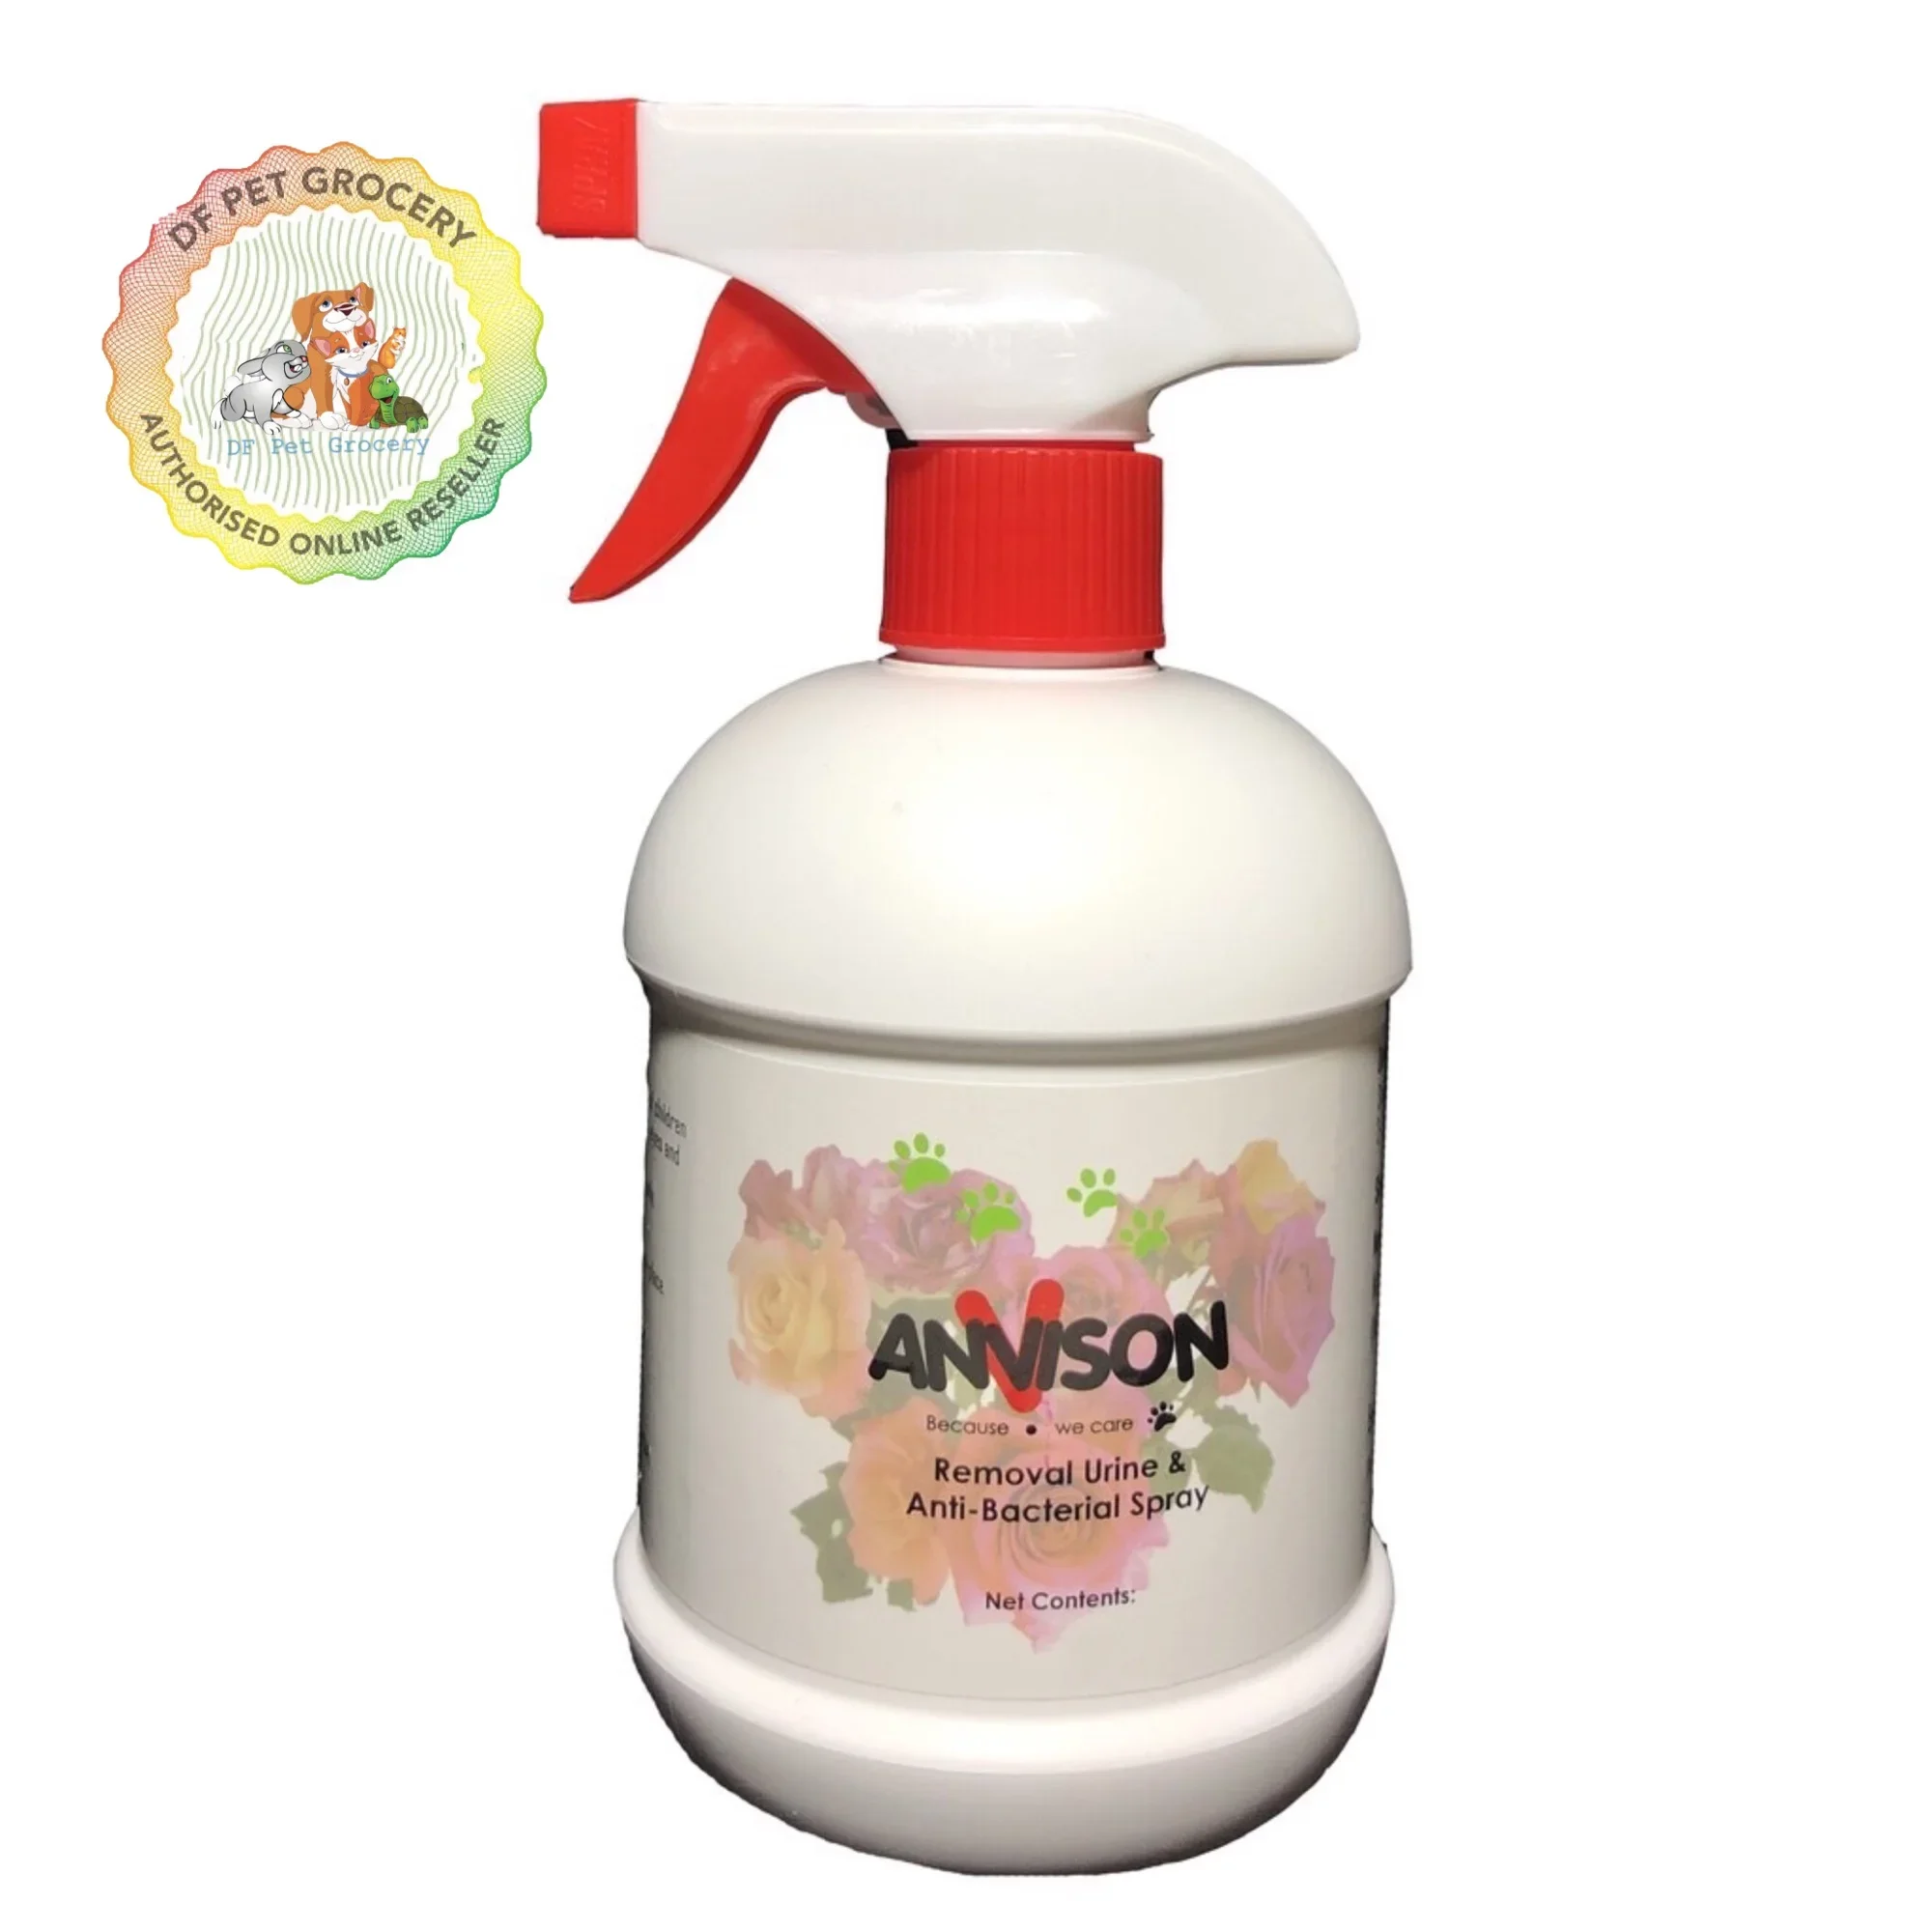 Anvison Removal Urine & Anti-Bacterial Spray (250ml)